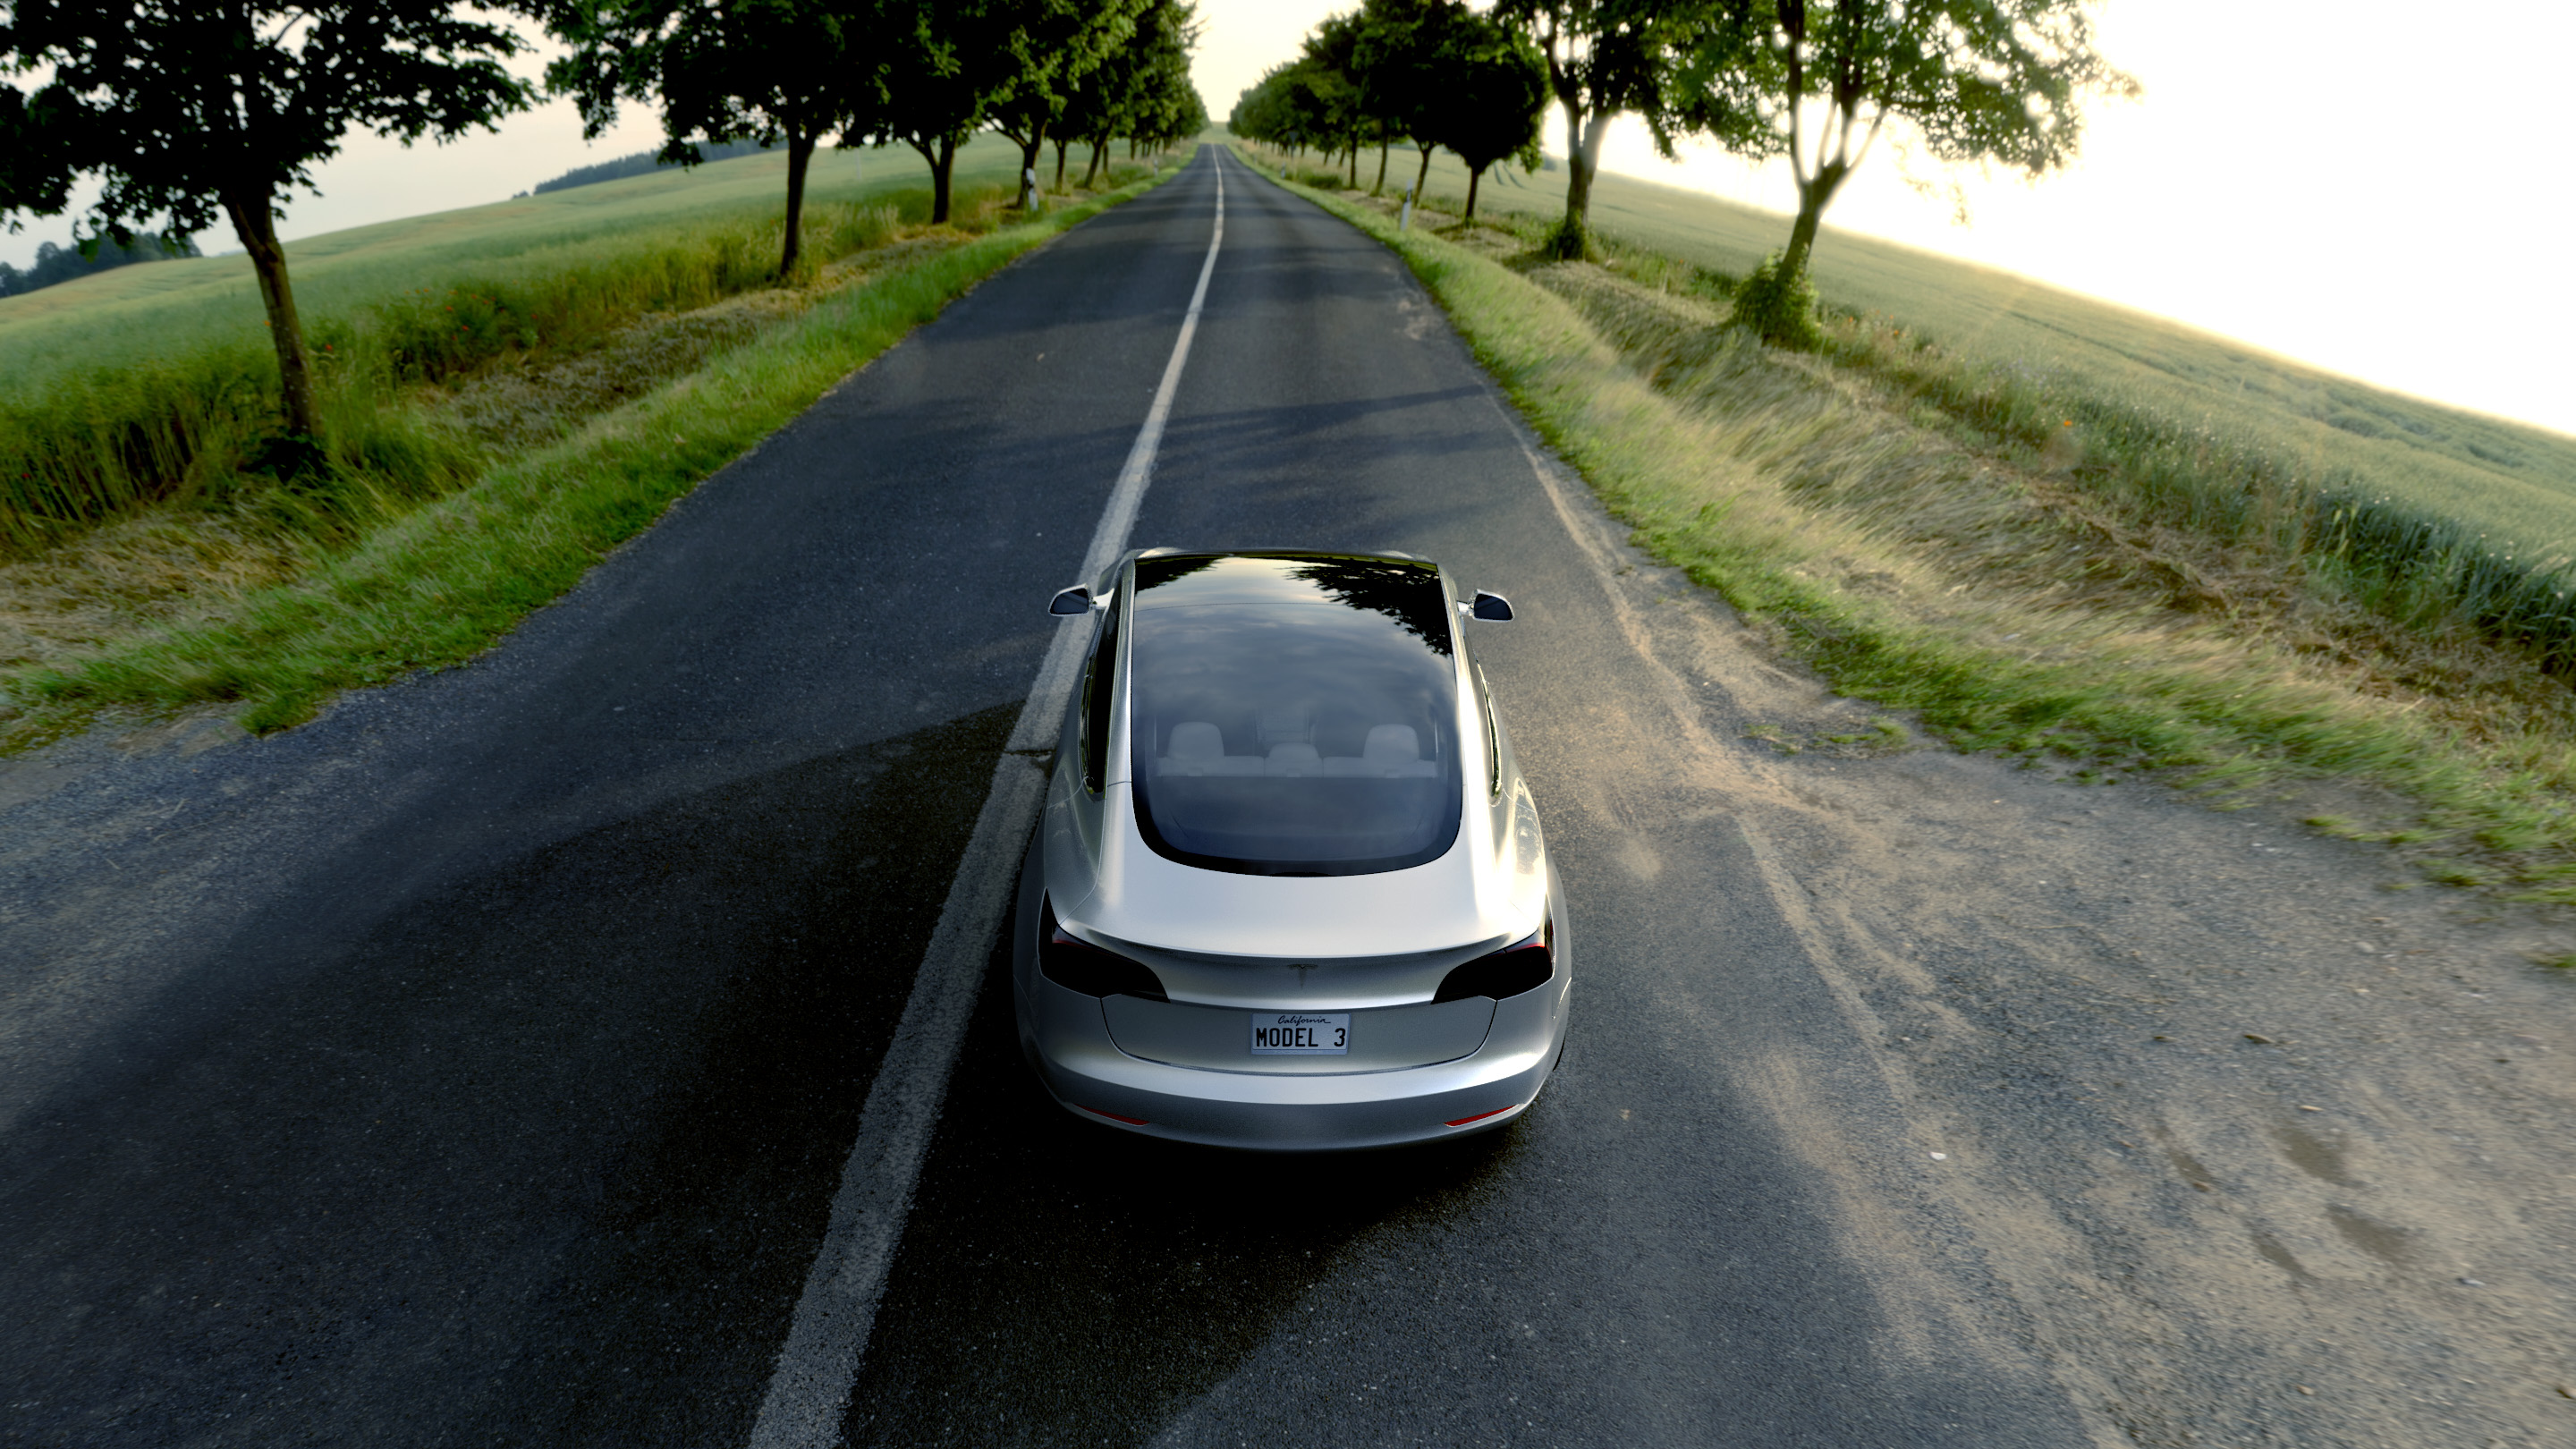 Vil del to av Teslas ultimate plan omhandle Model 3?